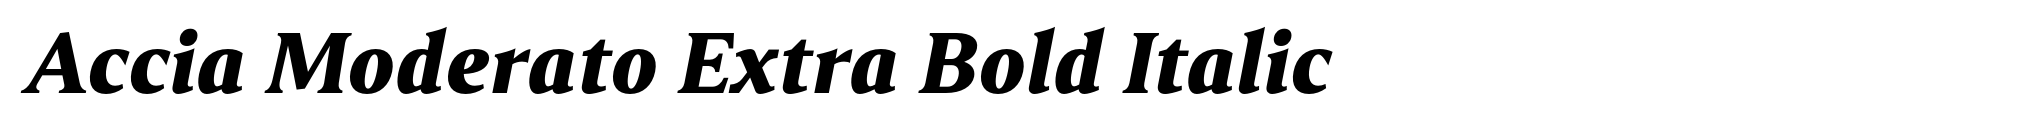 Accia Moderato Extra Bold Italic image